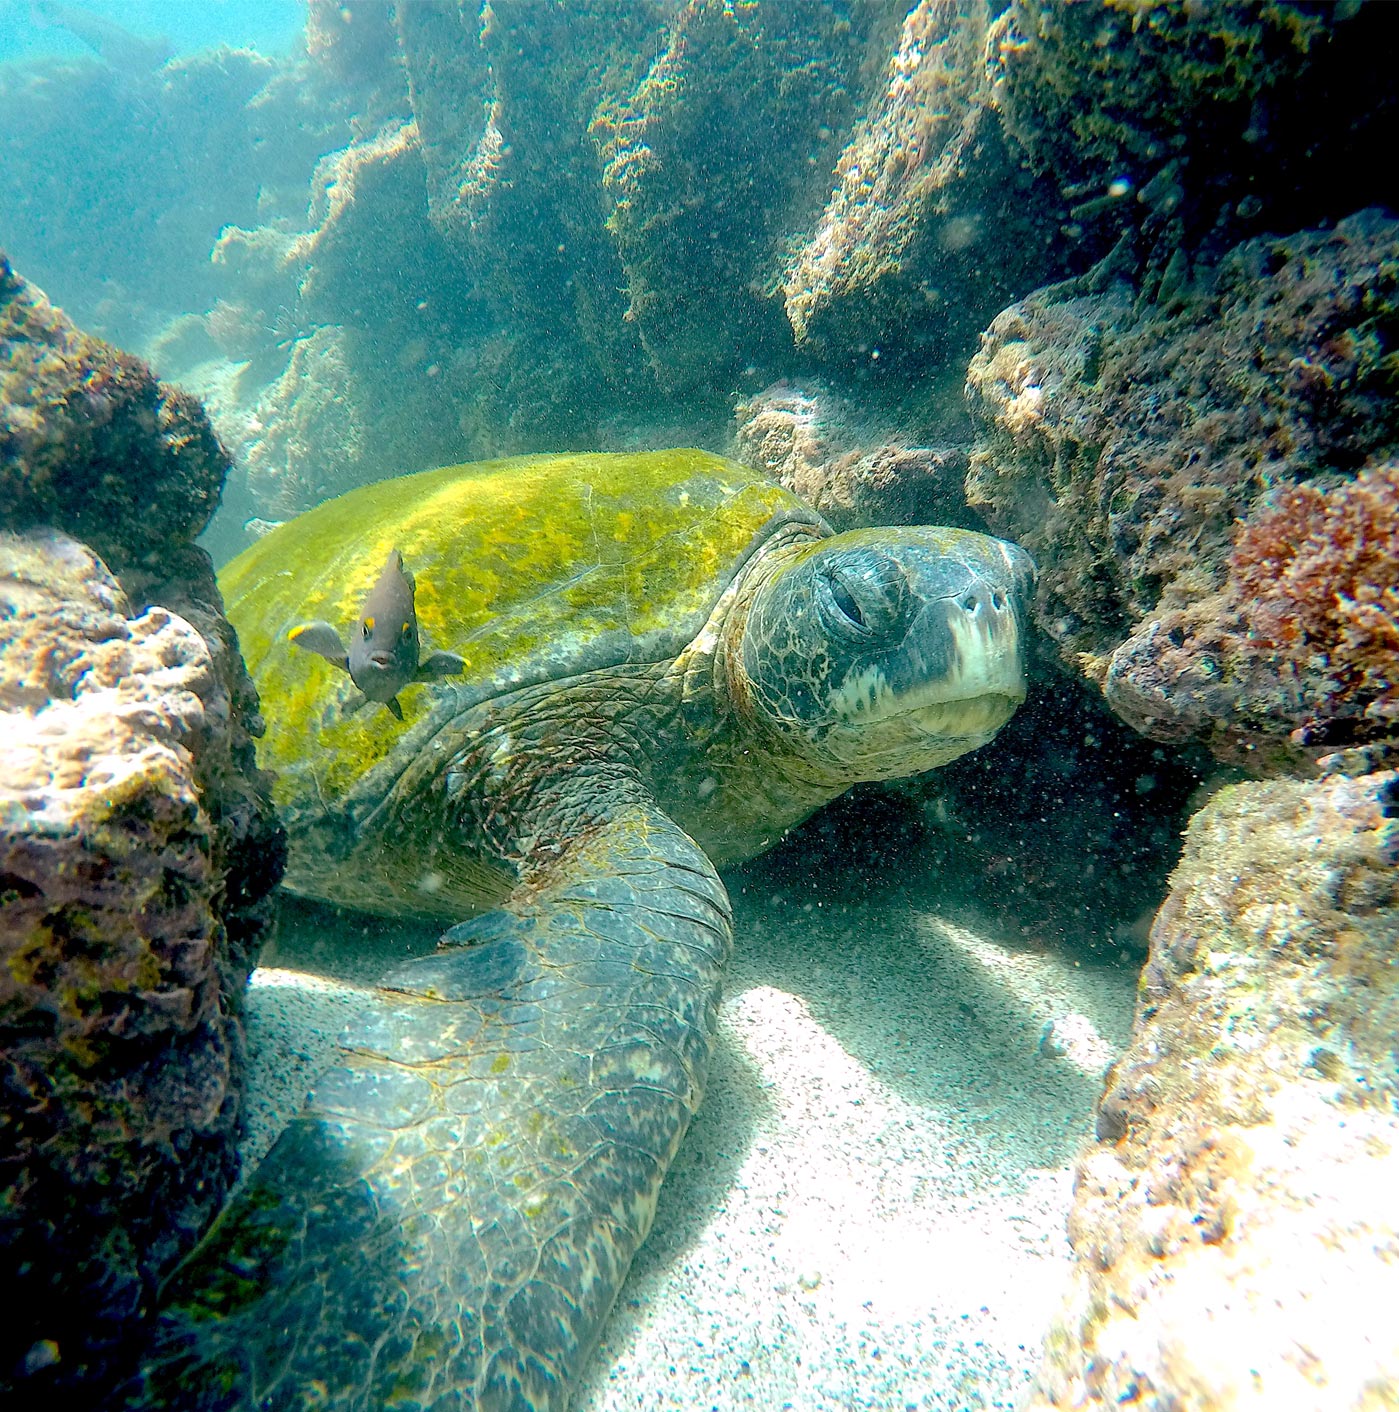 A sea turtle under the water between rocks